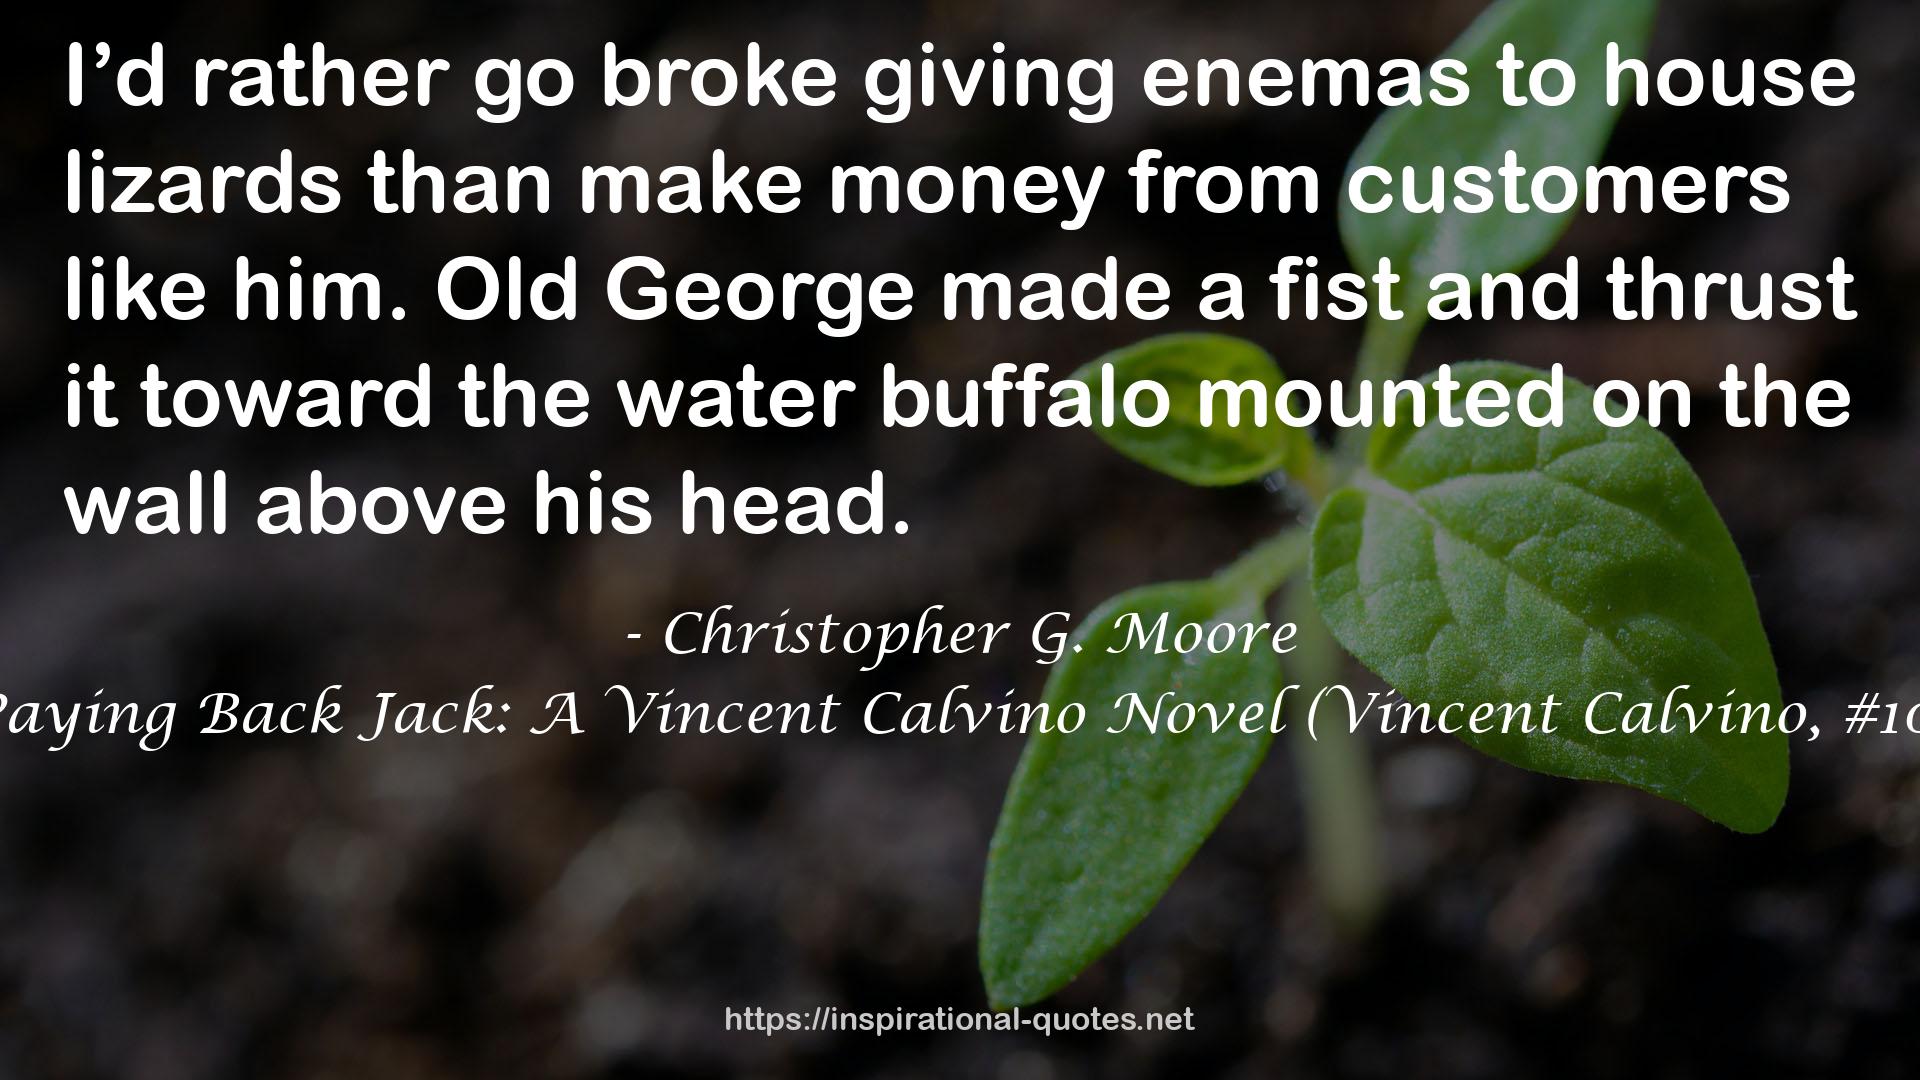 Paying Back Jack: A Vincent Calvino Novel (Vincent Calvino, #10) QUOTES